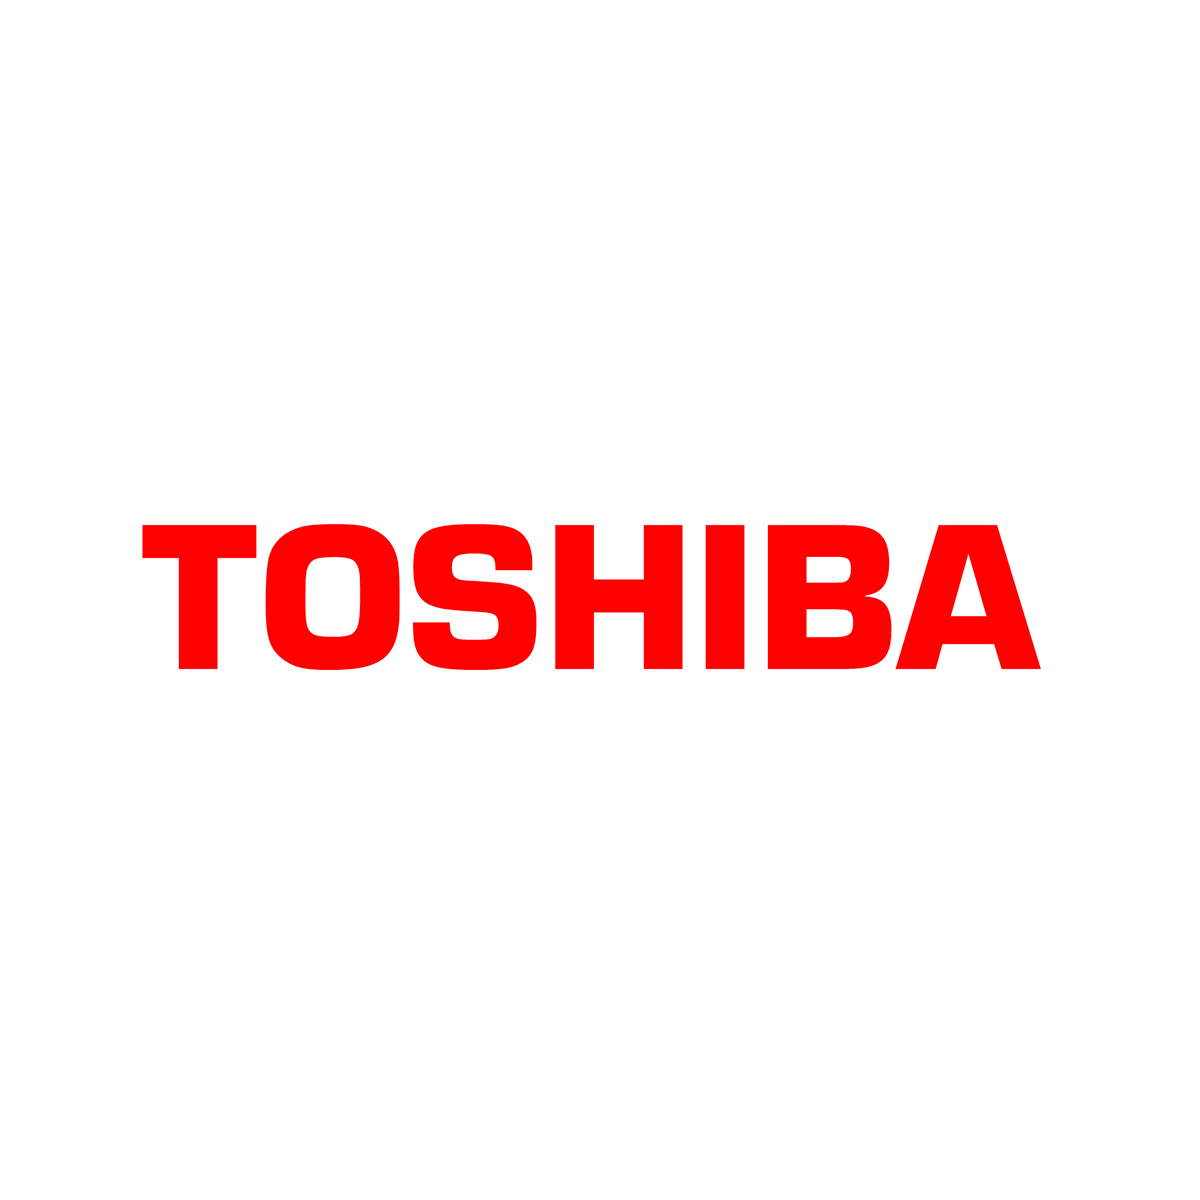 TOSHIBA BOBINA IF02 3u.